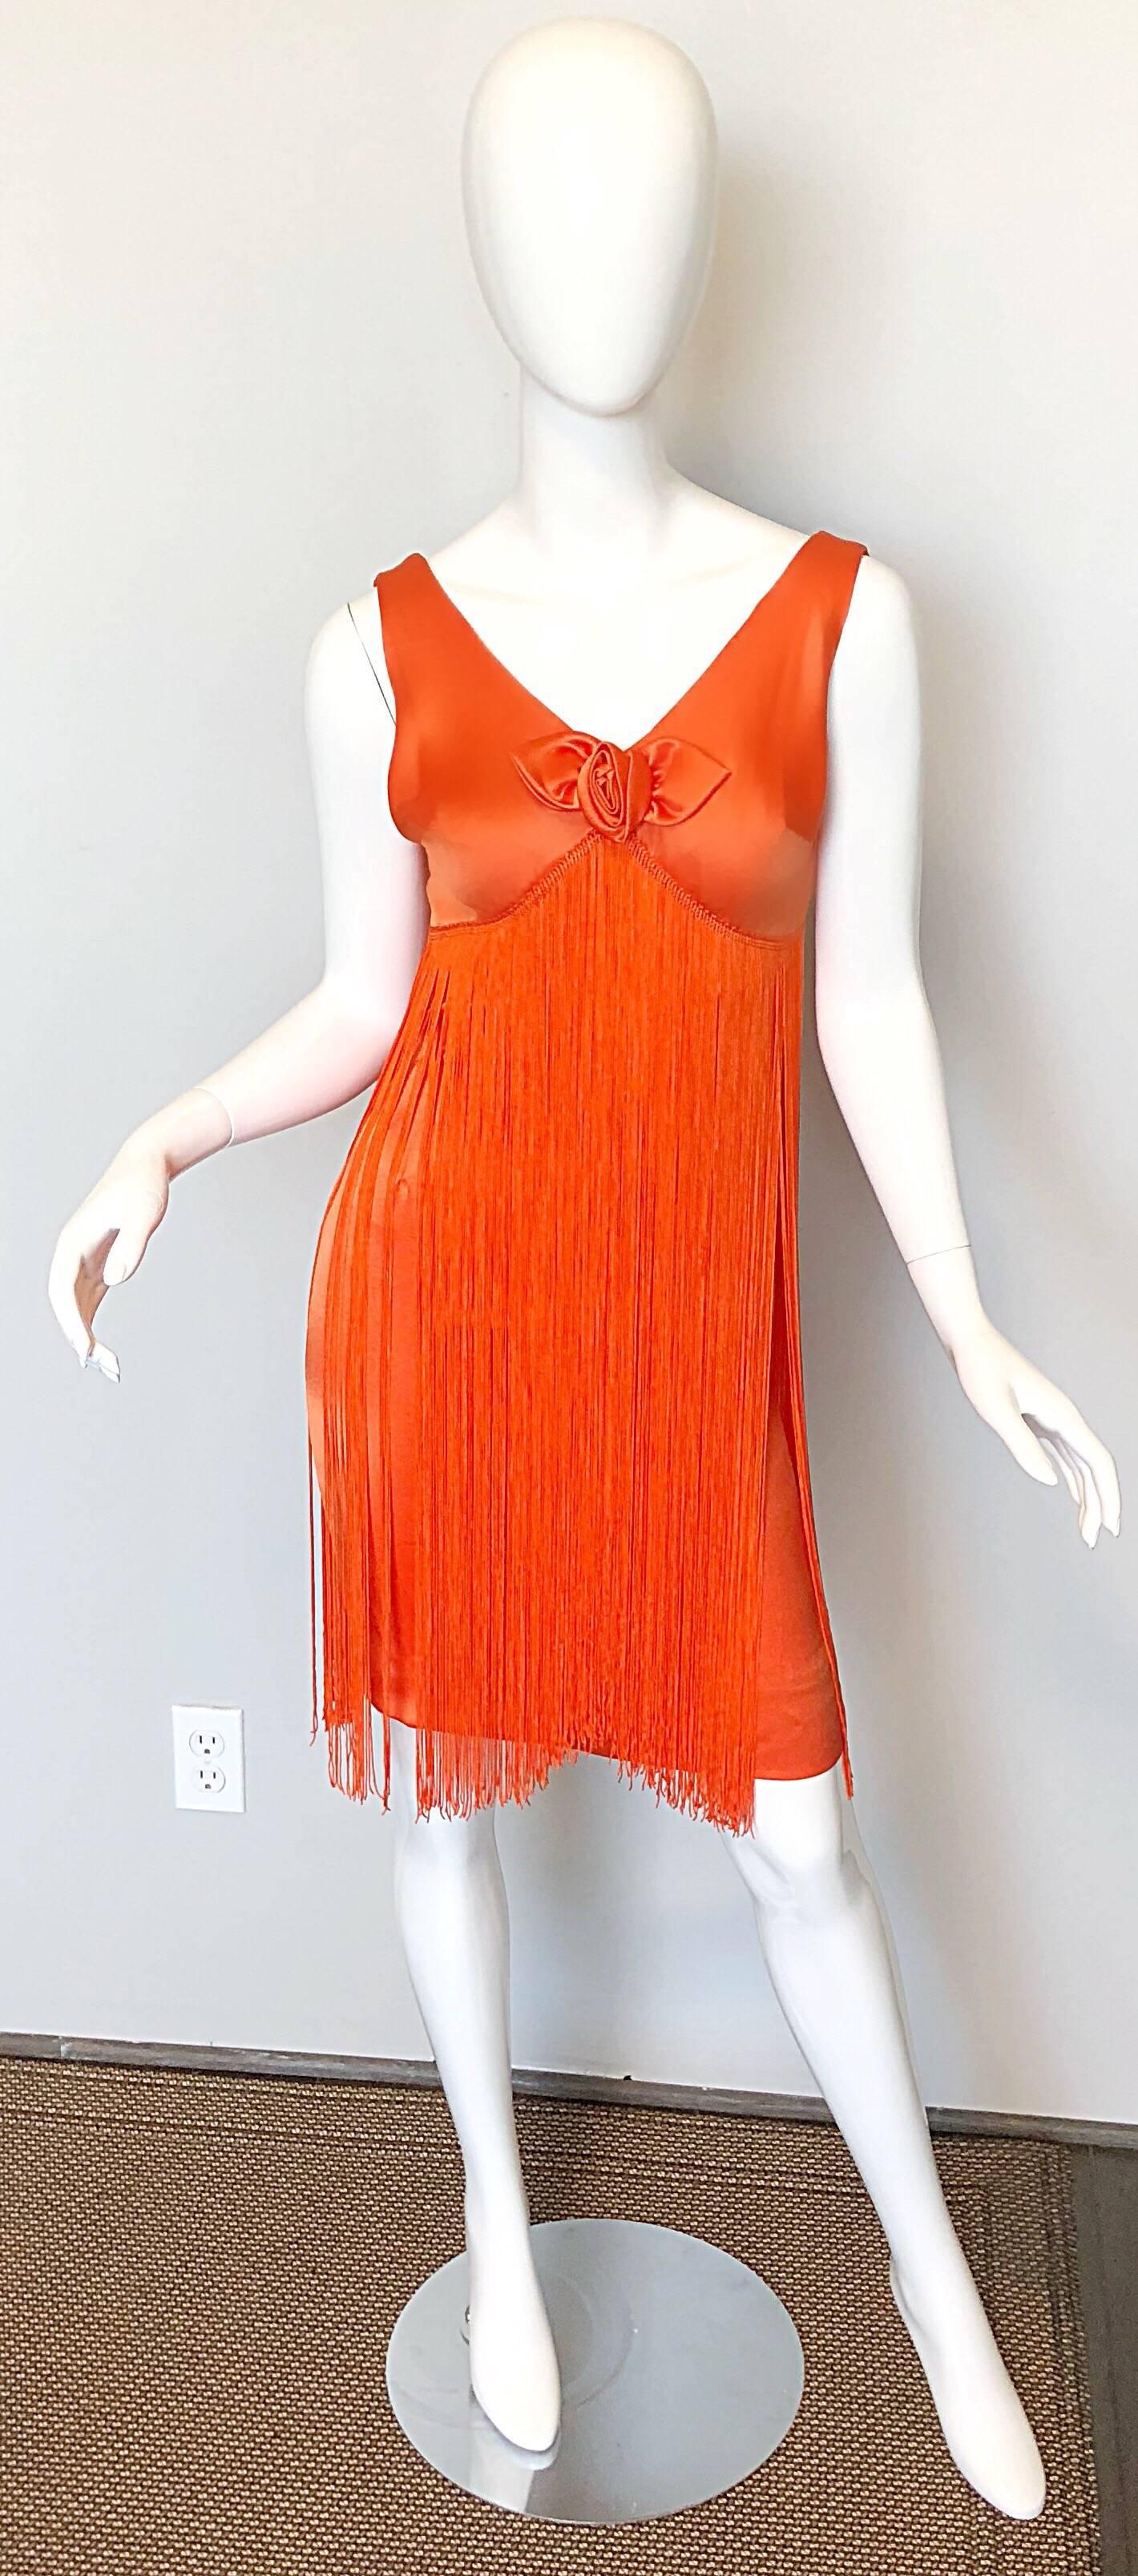 Joseph Magnin 1960s Amazing Bright Orange Fully Fringe Flapper Jersey 60s Dress 1